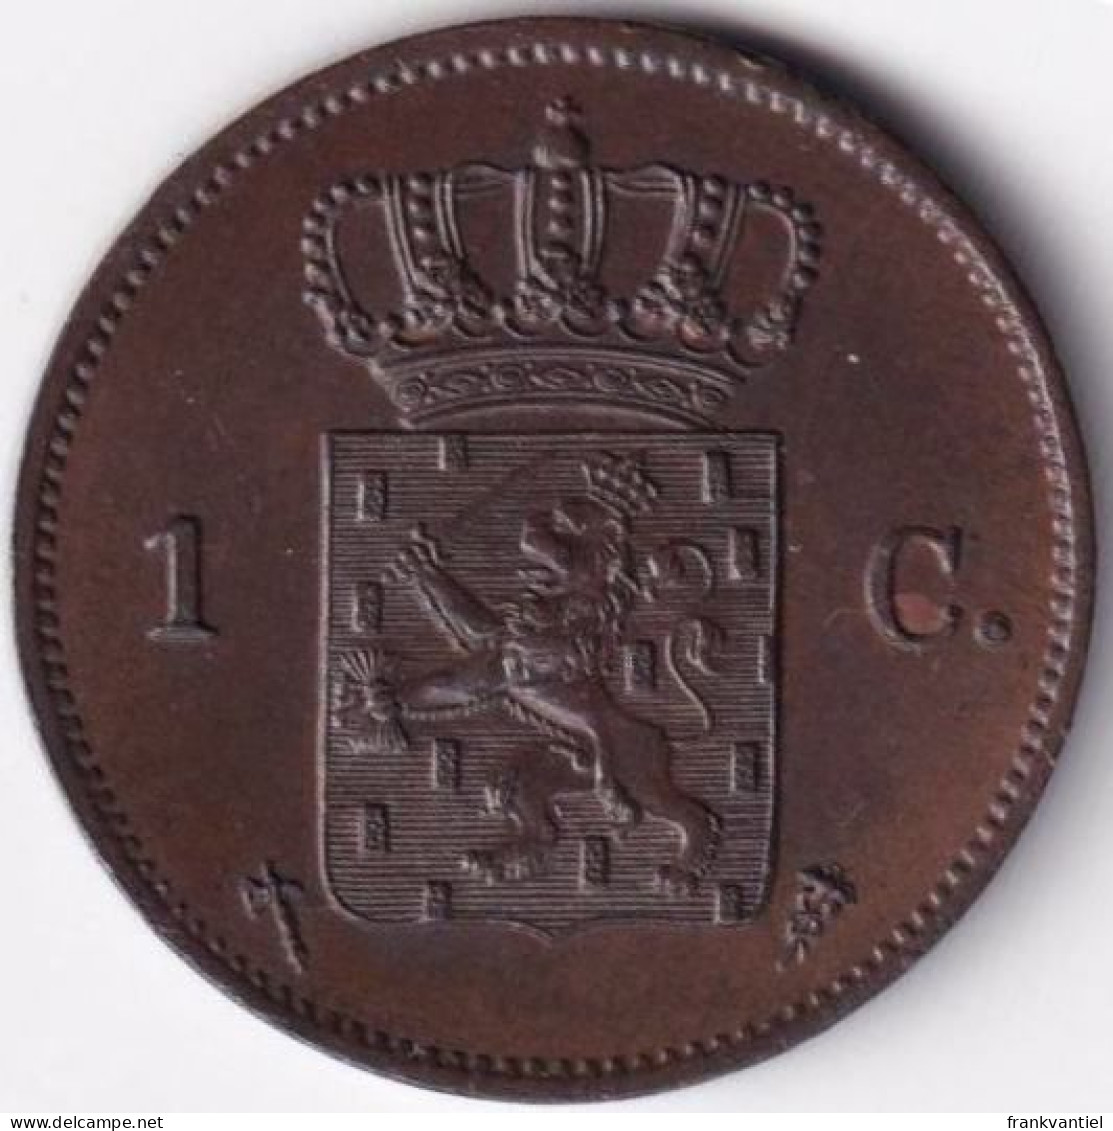 Nederland / Netherlands KM-100 1 Cent 1877 - 1849-1890: Willem III.